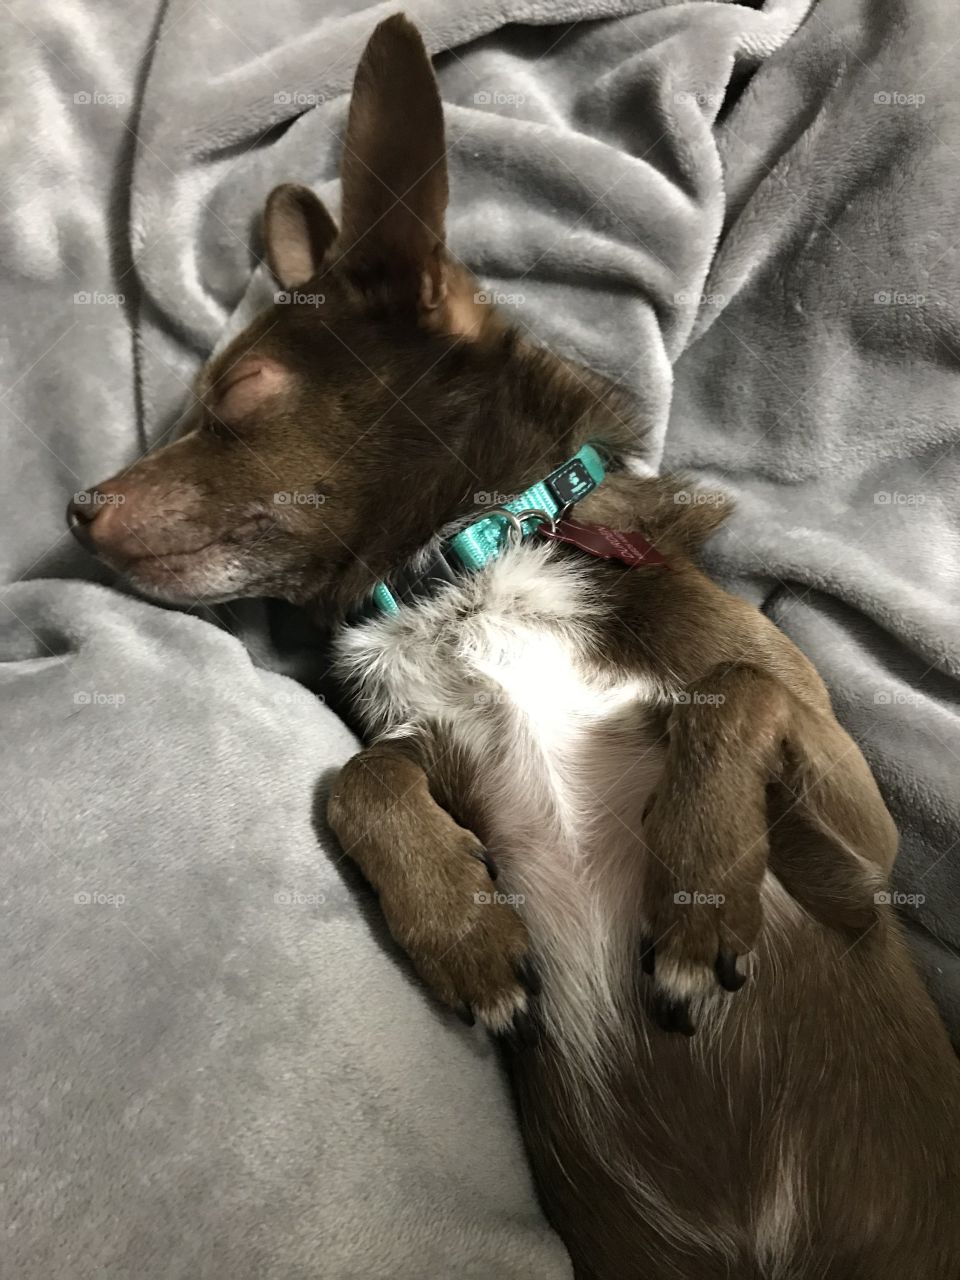 Dog sleeping in a blanket